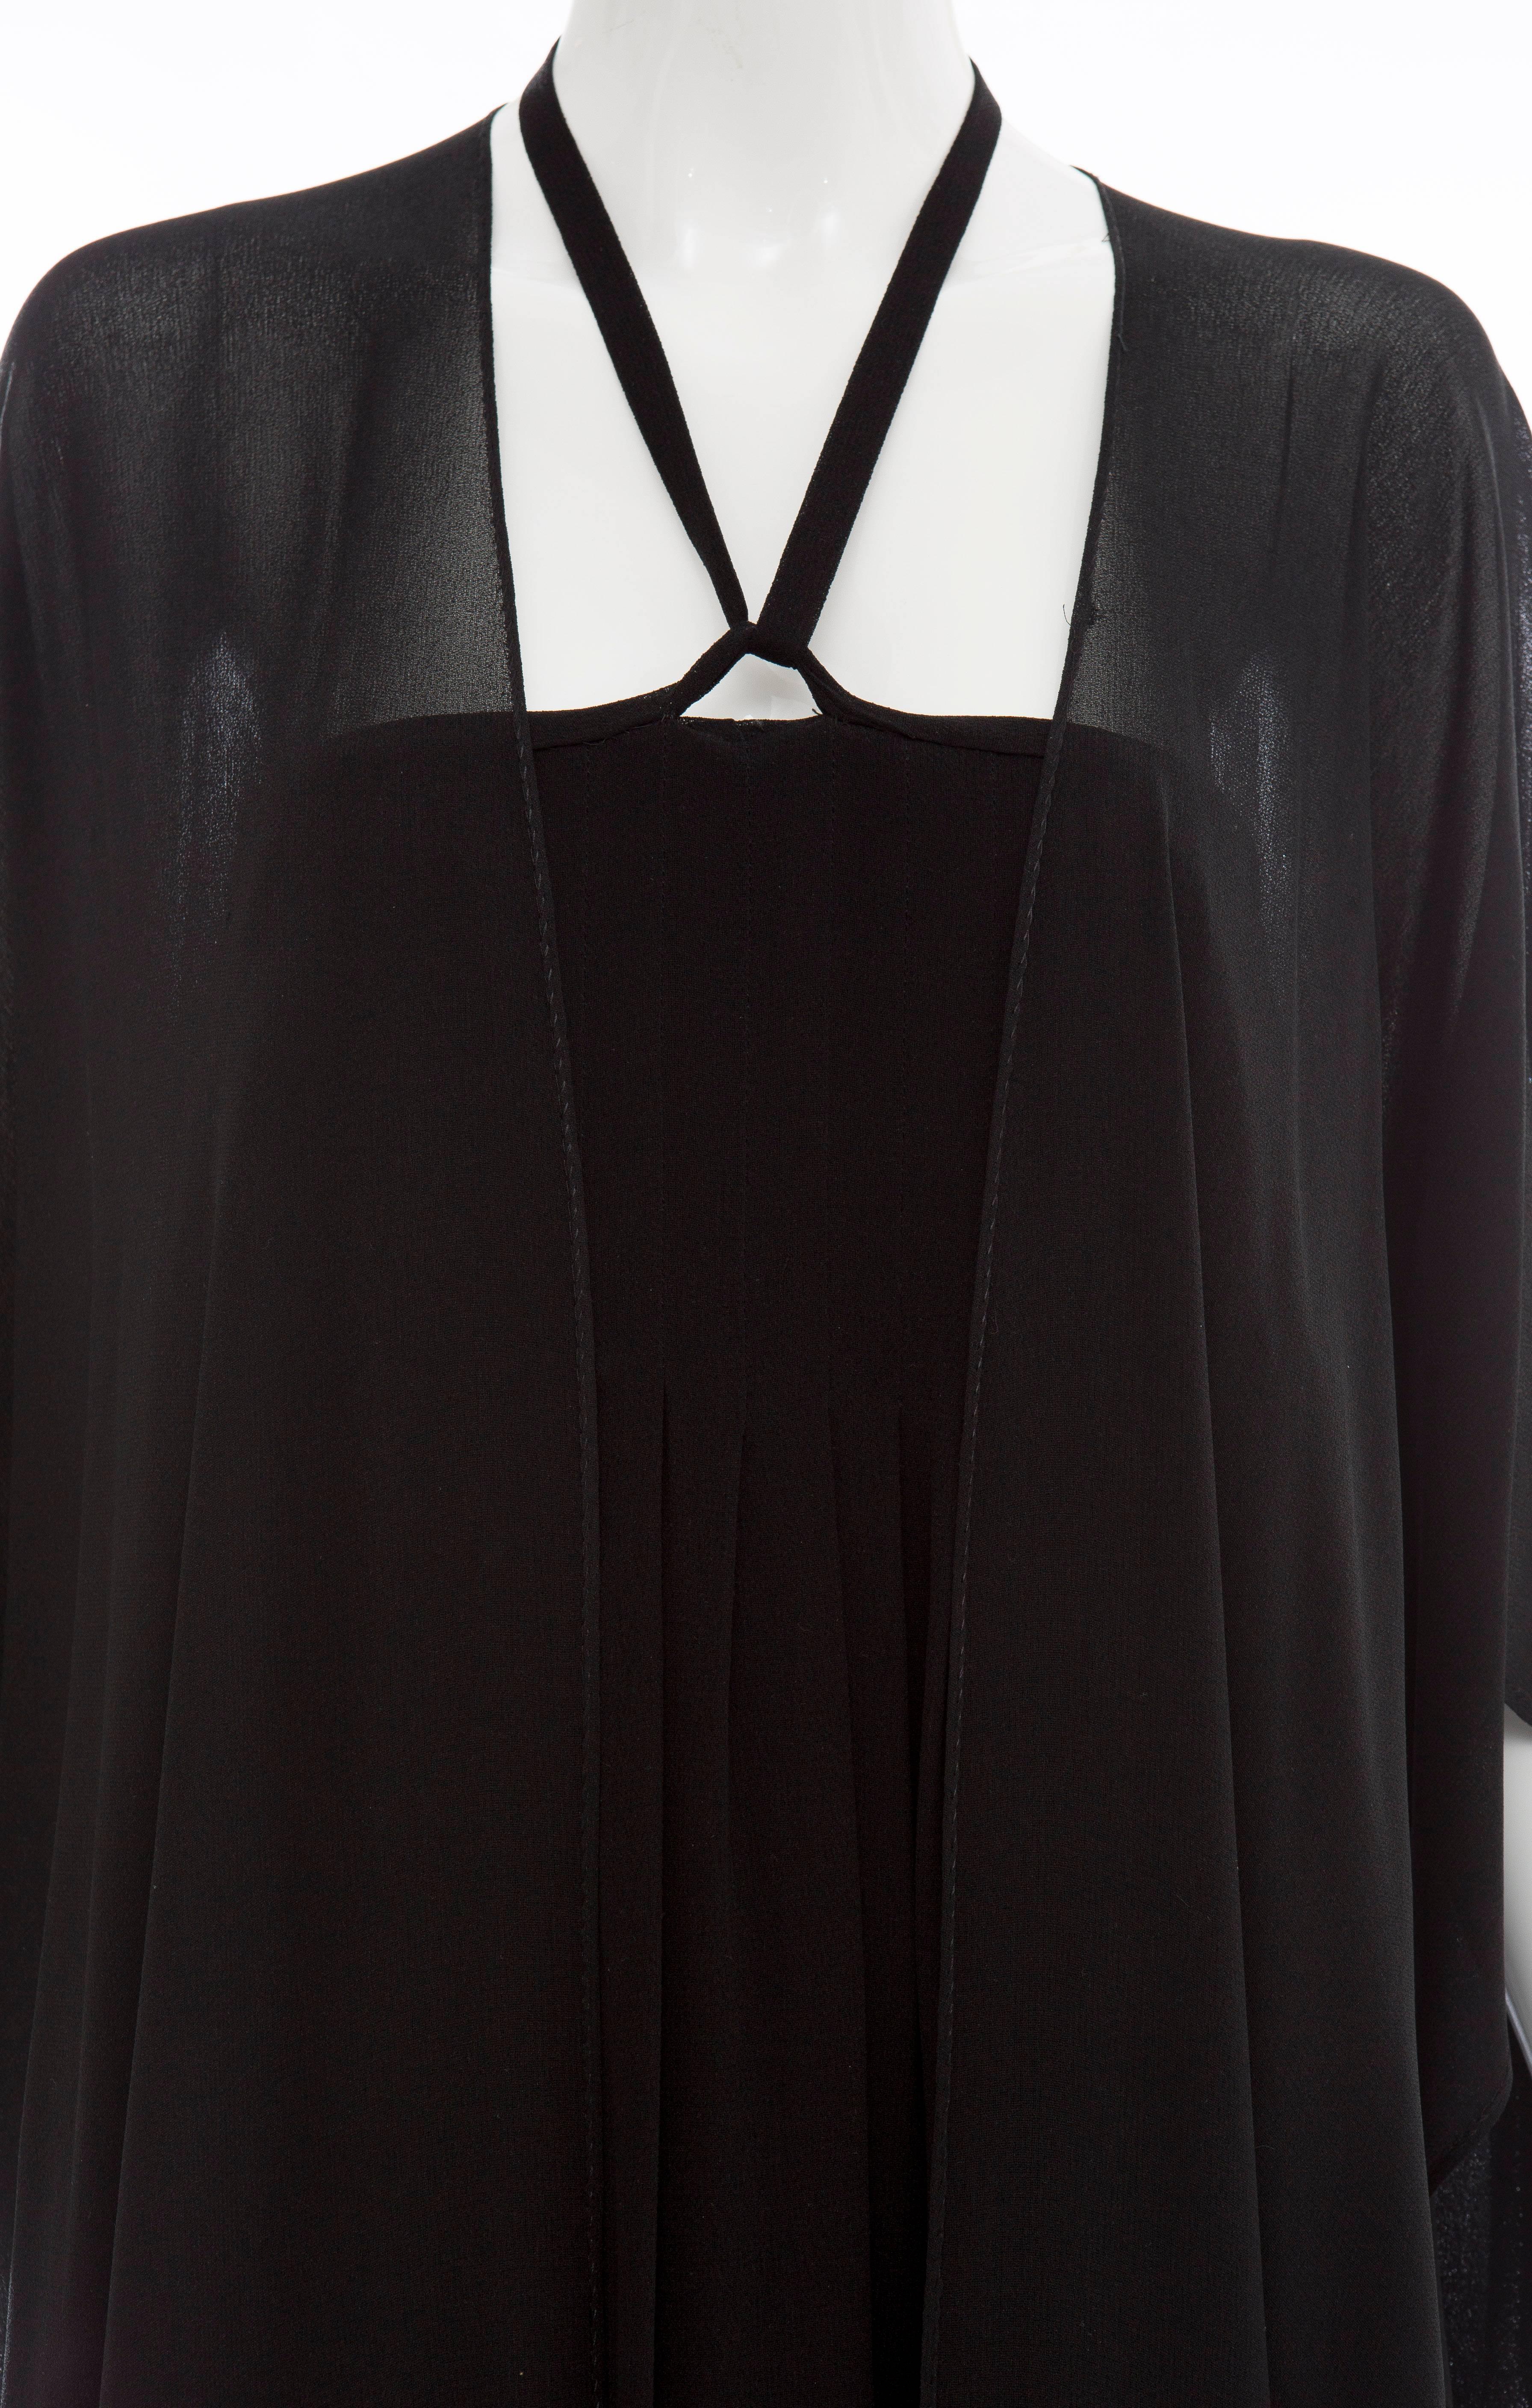 Bill Blass Black Nun's Cloth Strapless Evening Dress, Circa 1970's For Sale 2